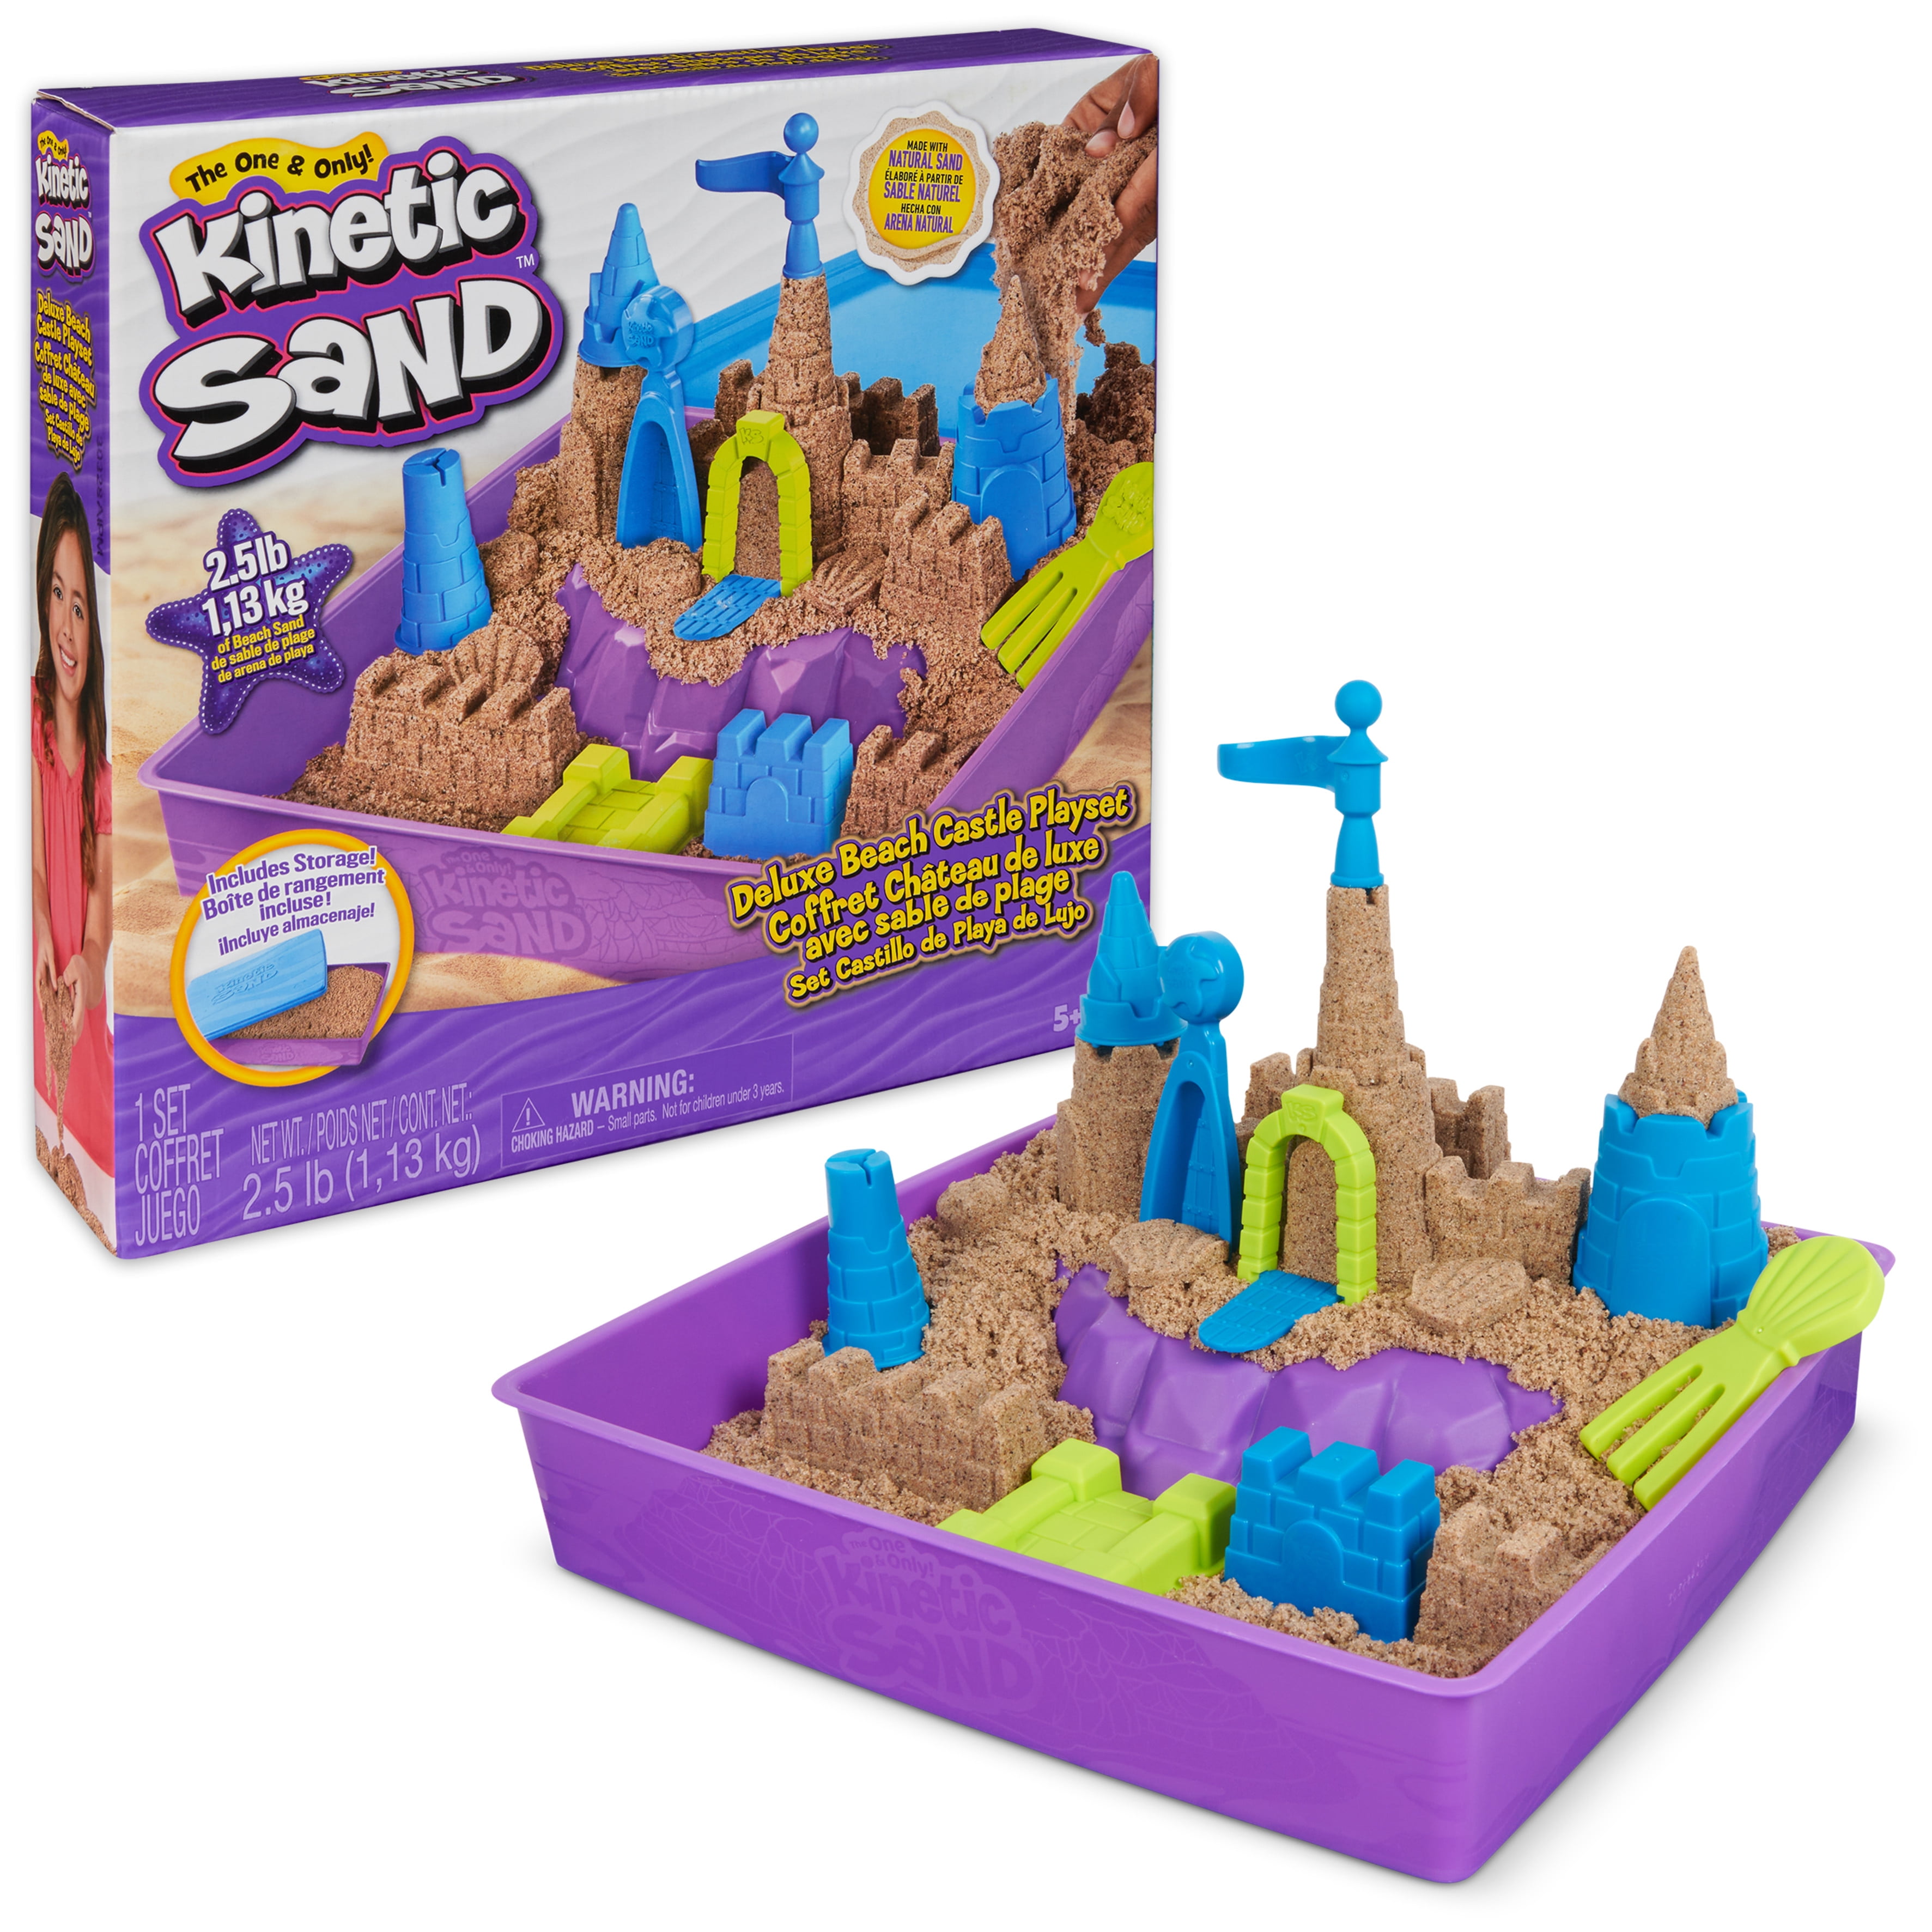 Kinetic Sand - Sandisfying Set - Play set - 907 g - Avec les 10